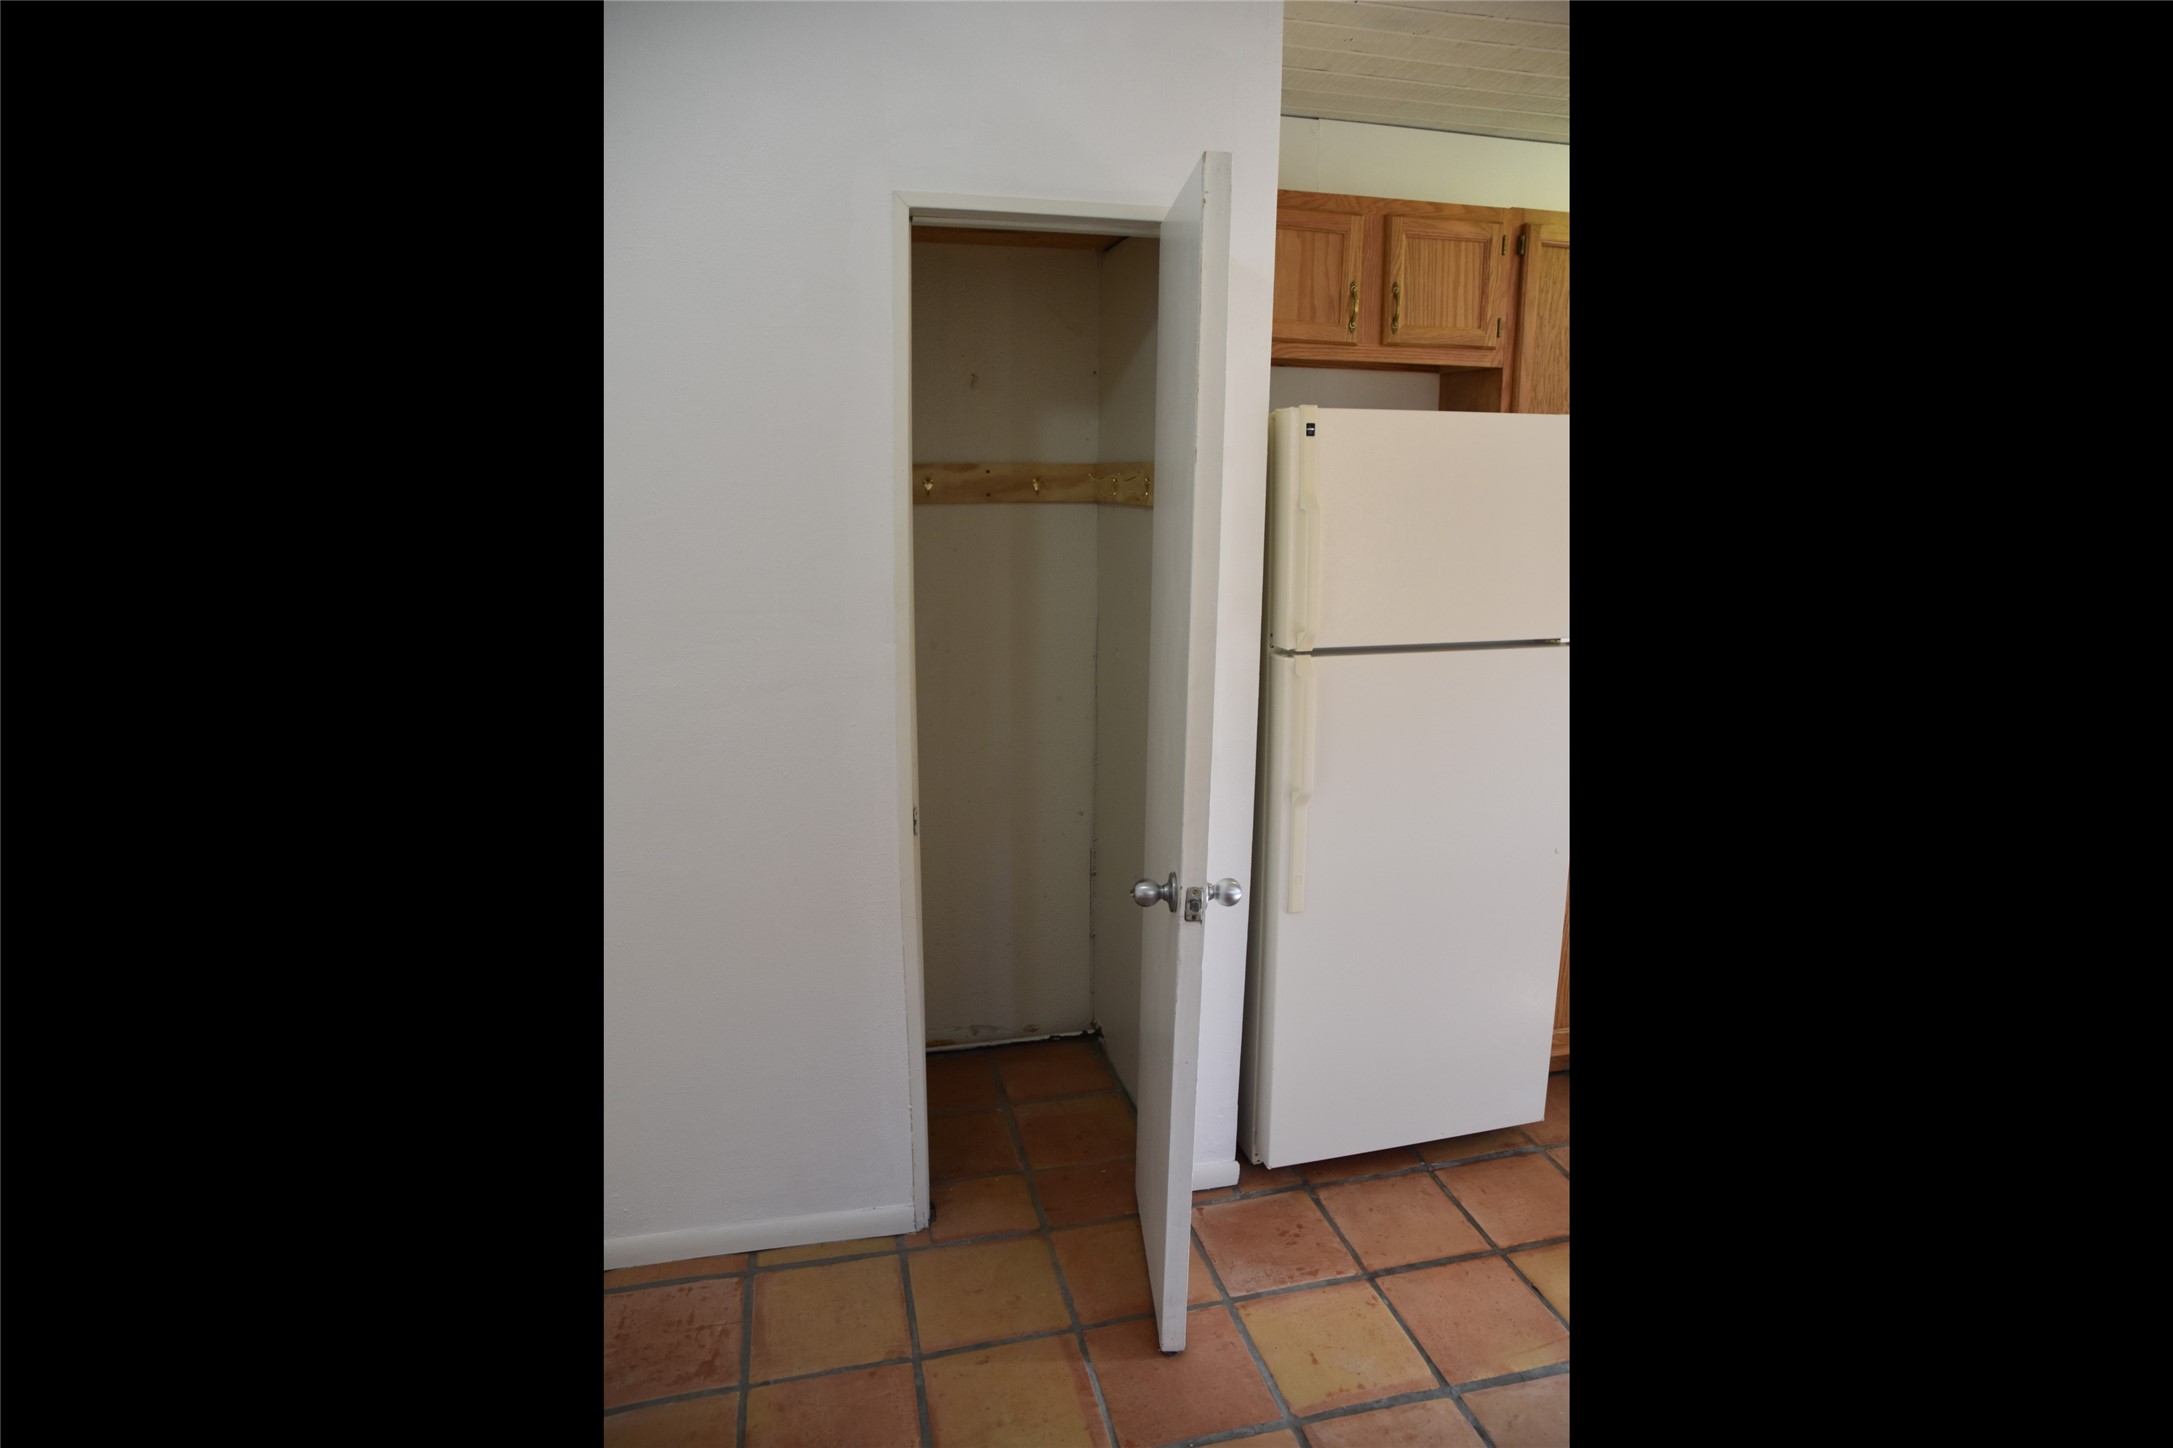 Kitchen - Closet/Pantry